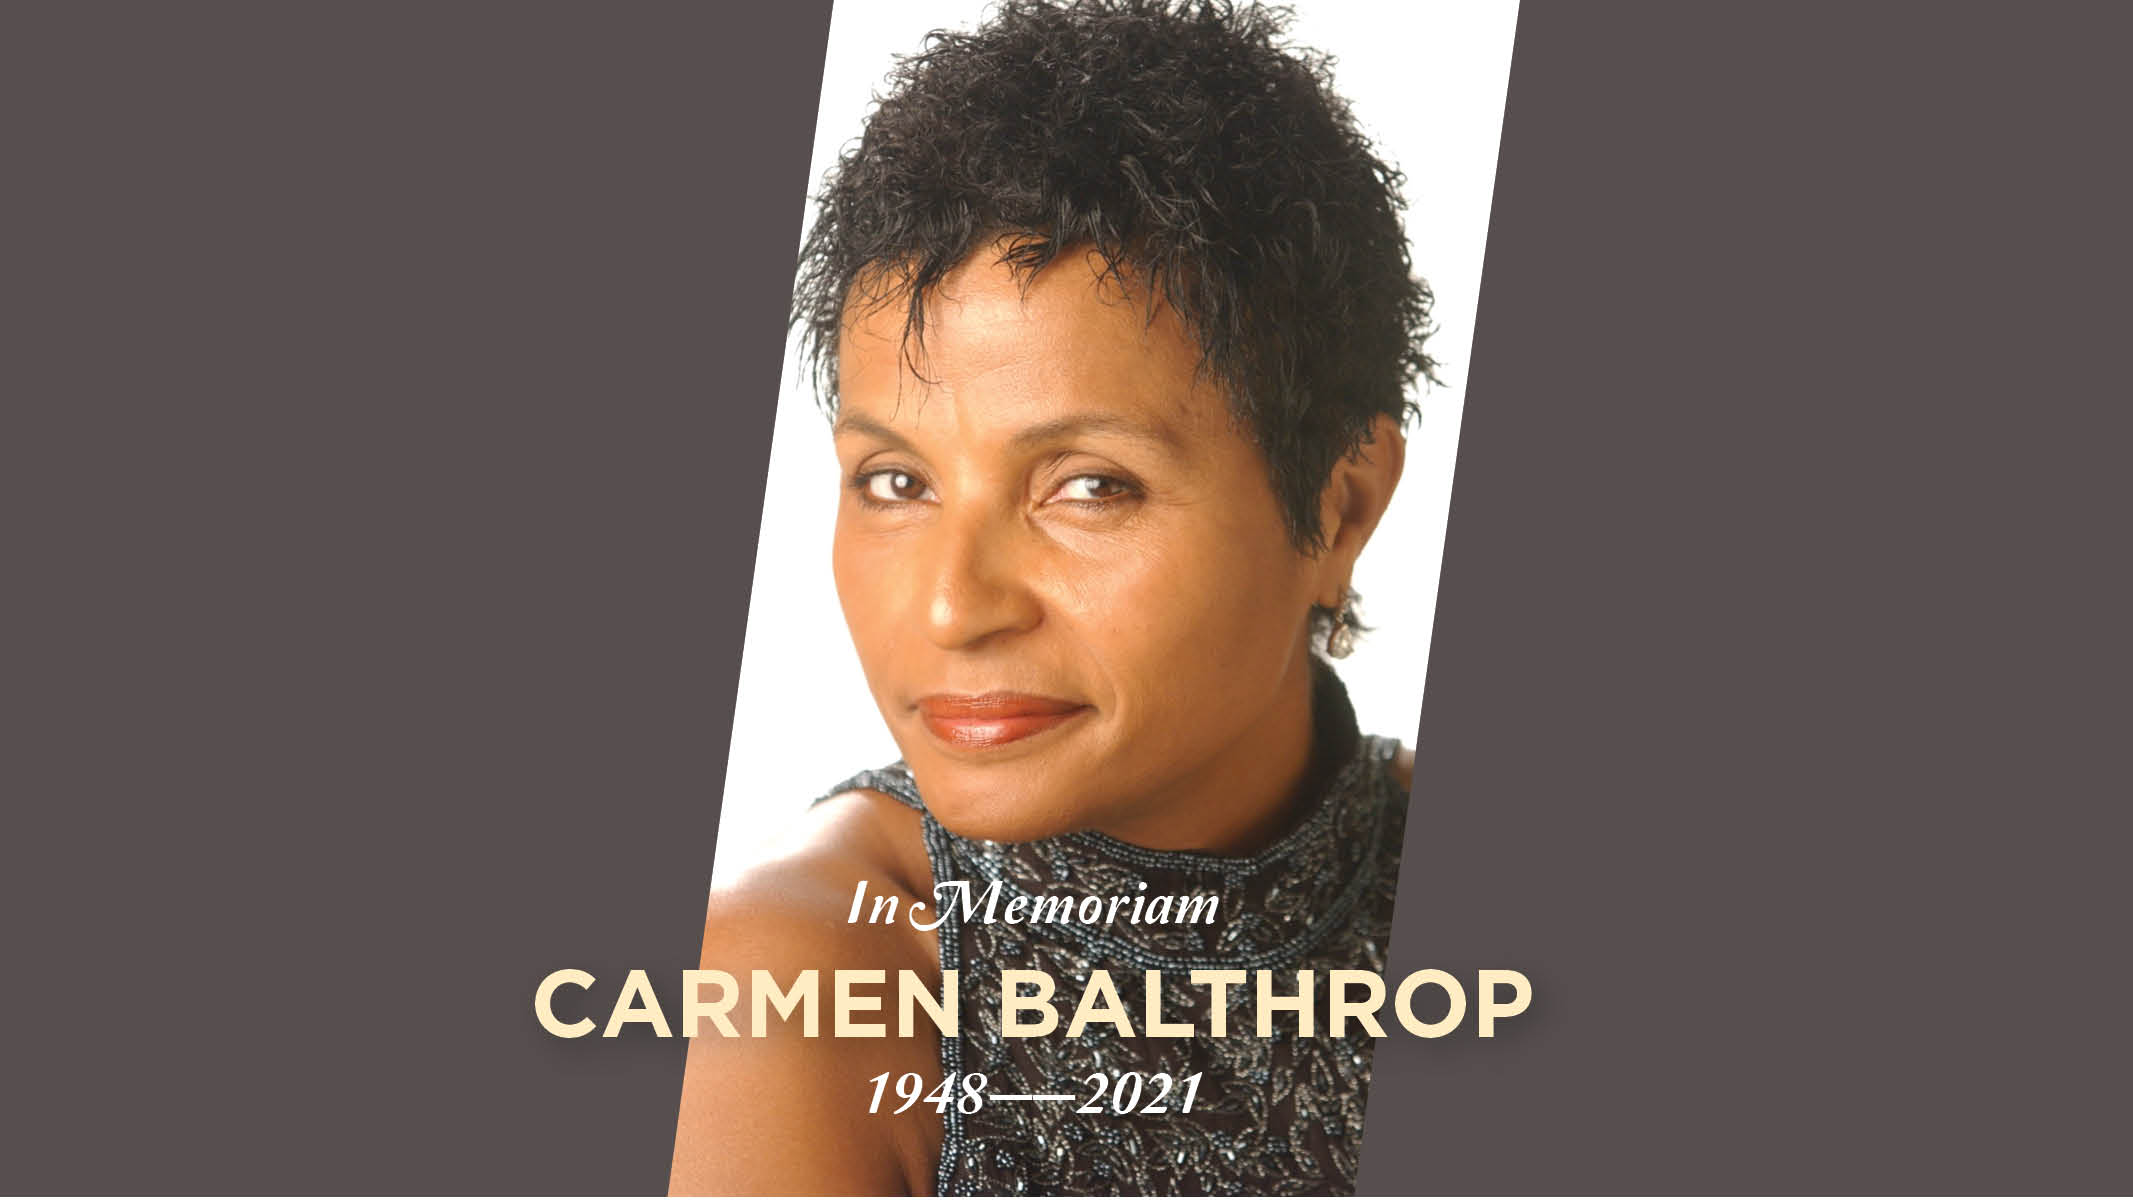  Professor Carmen Balthrop with text that says "In Memoriam: Carmen Balthrop: 1948-2021"